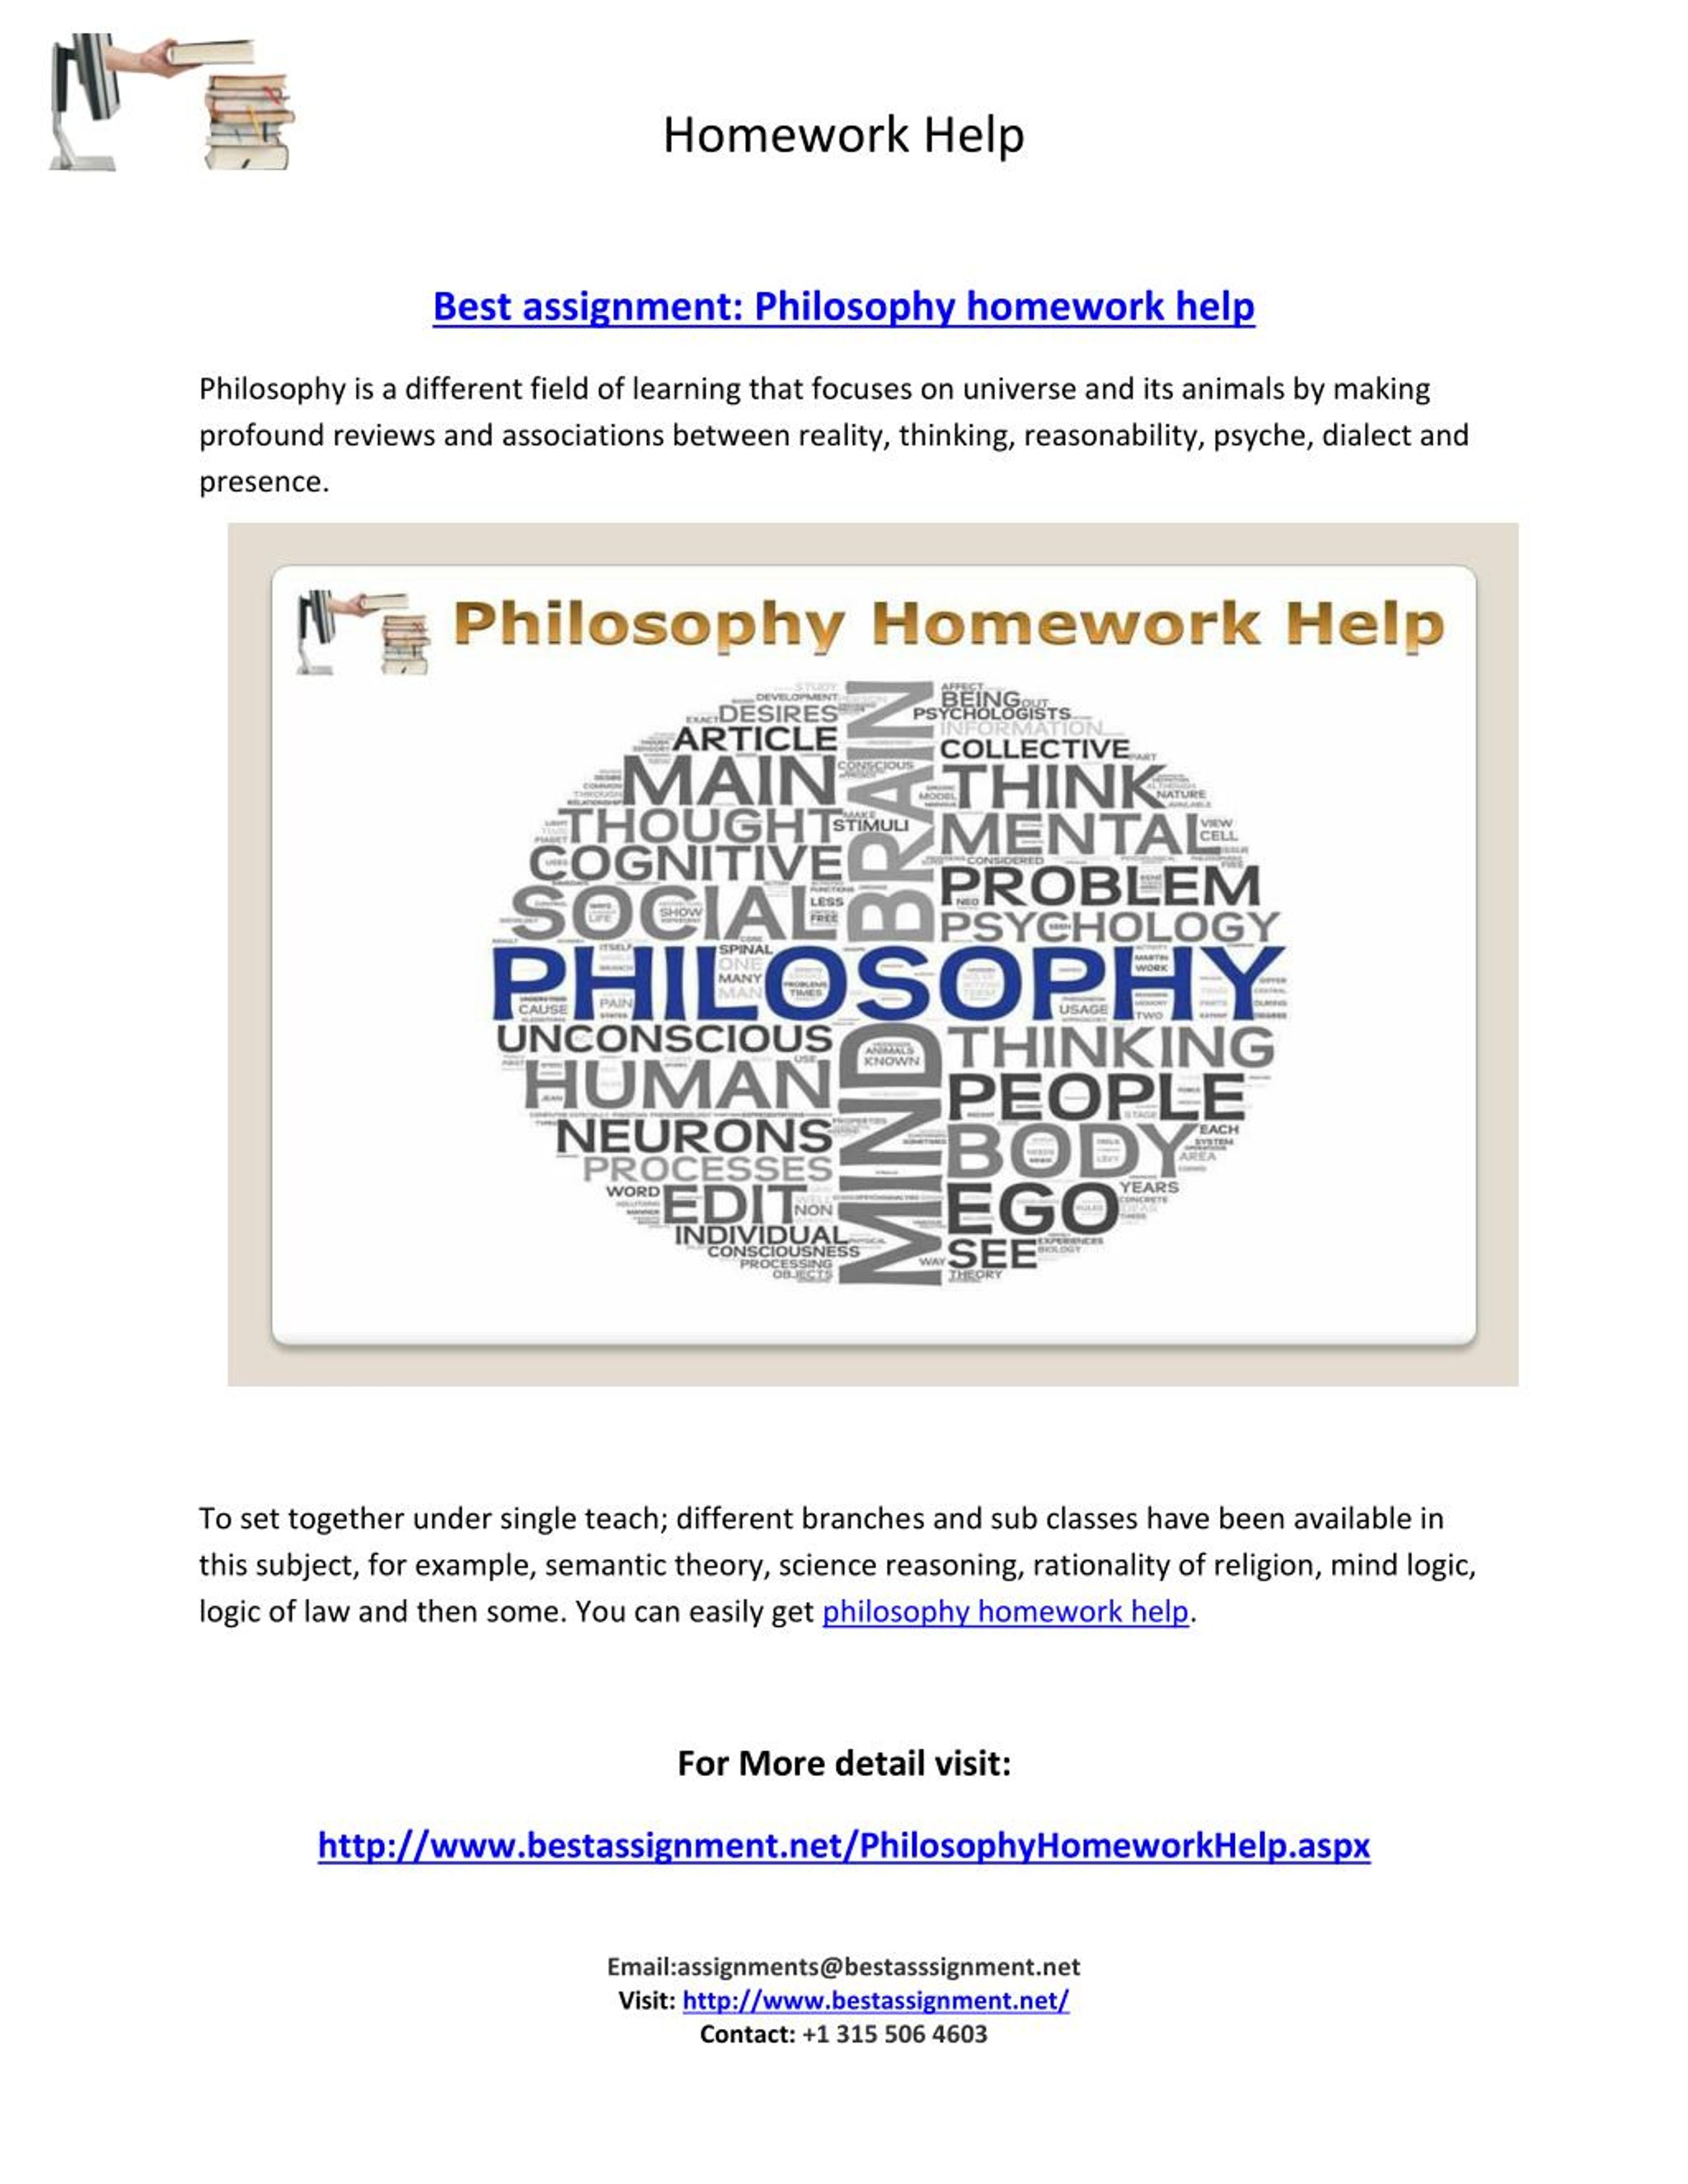 philosophy homework help free